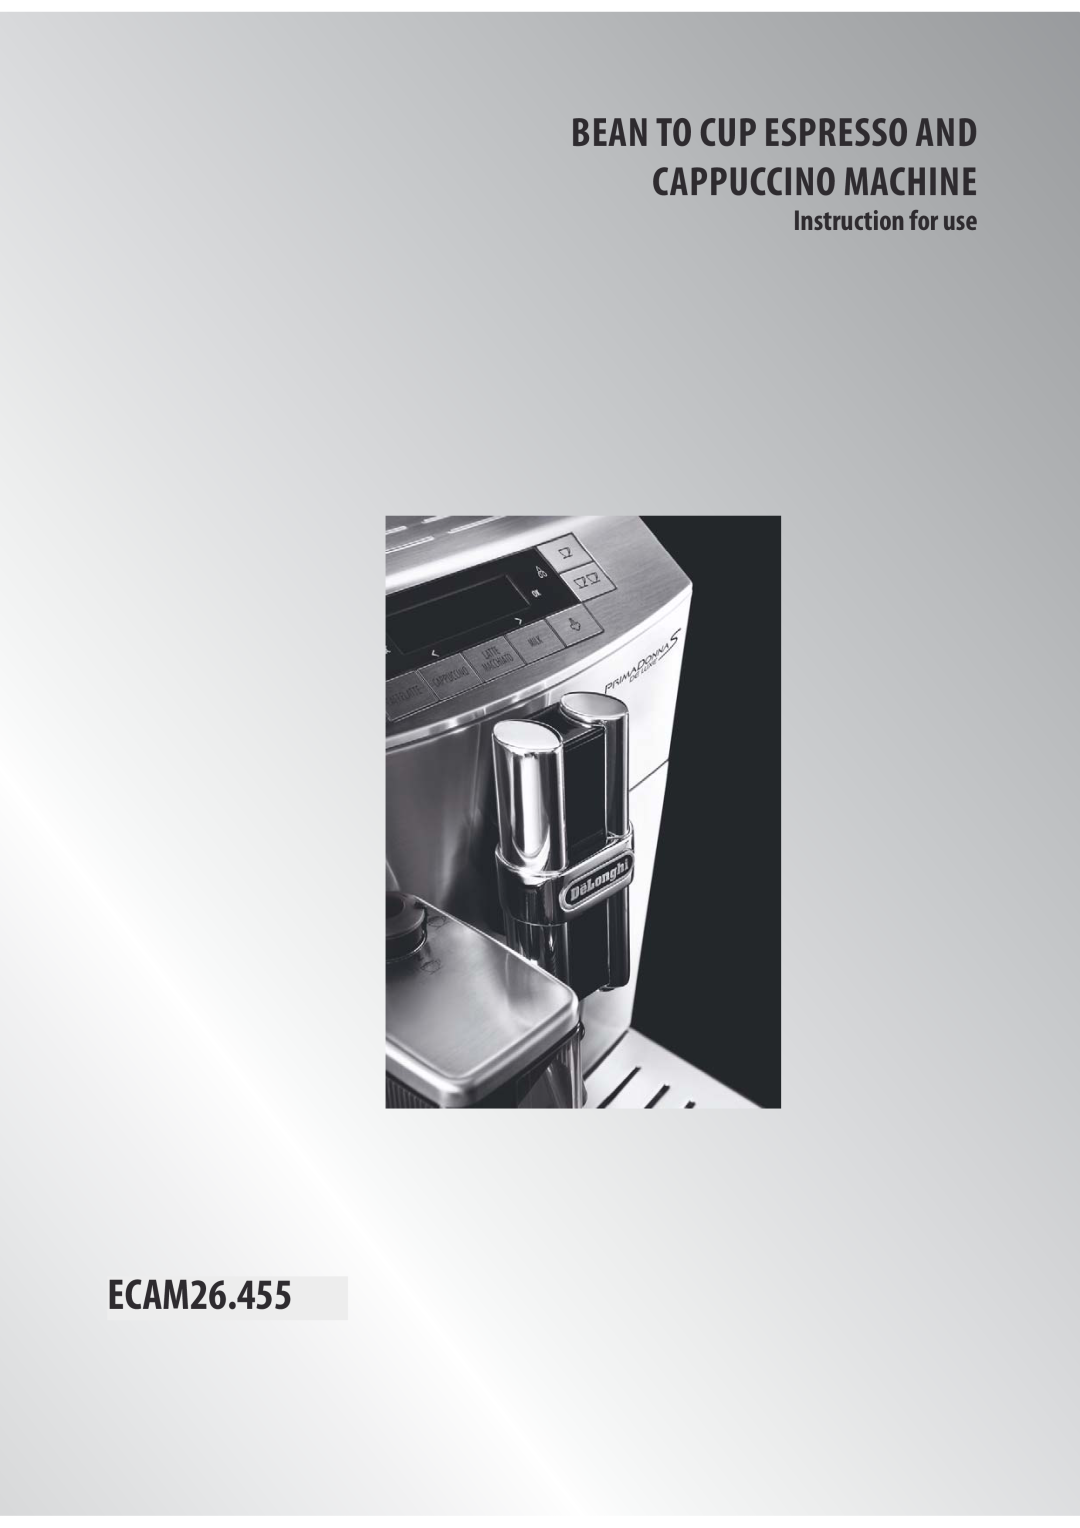 DeLonghi ECAM26455 manual ECAM26.455, Bean To Cup Espresso And Cappuccino Machine, Instruction for use 